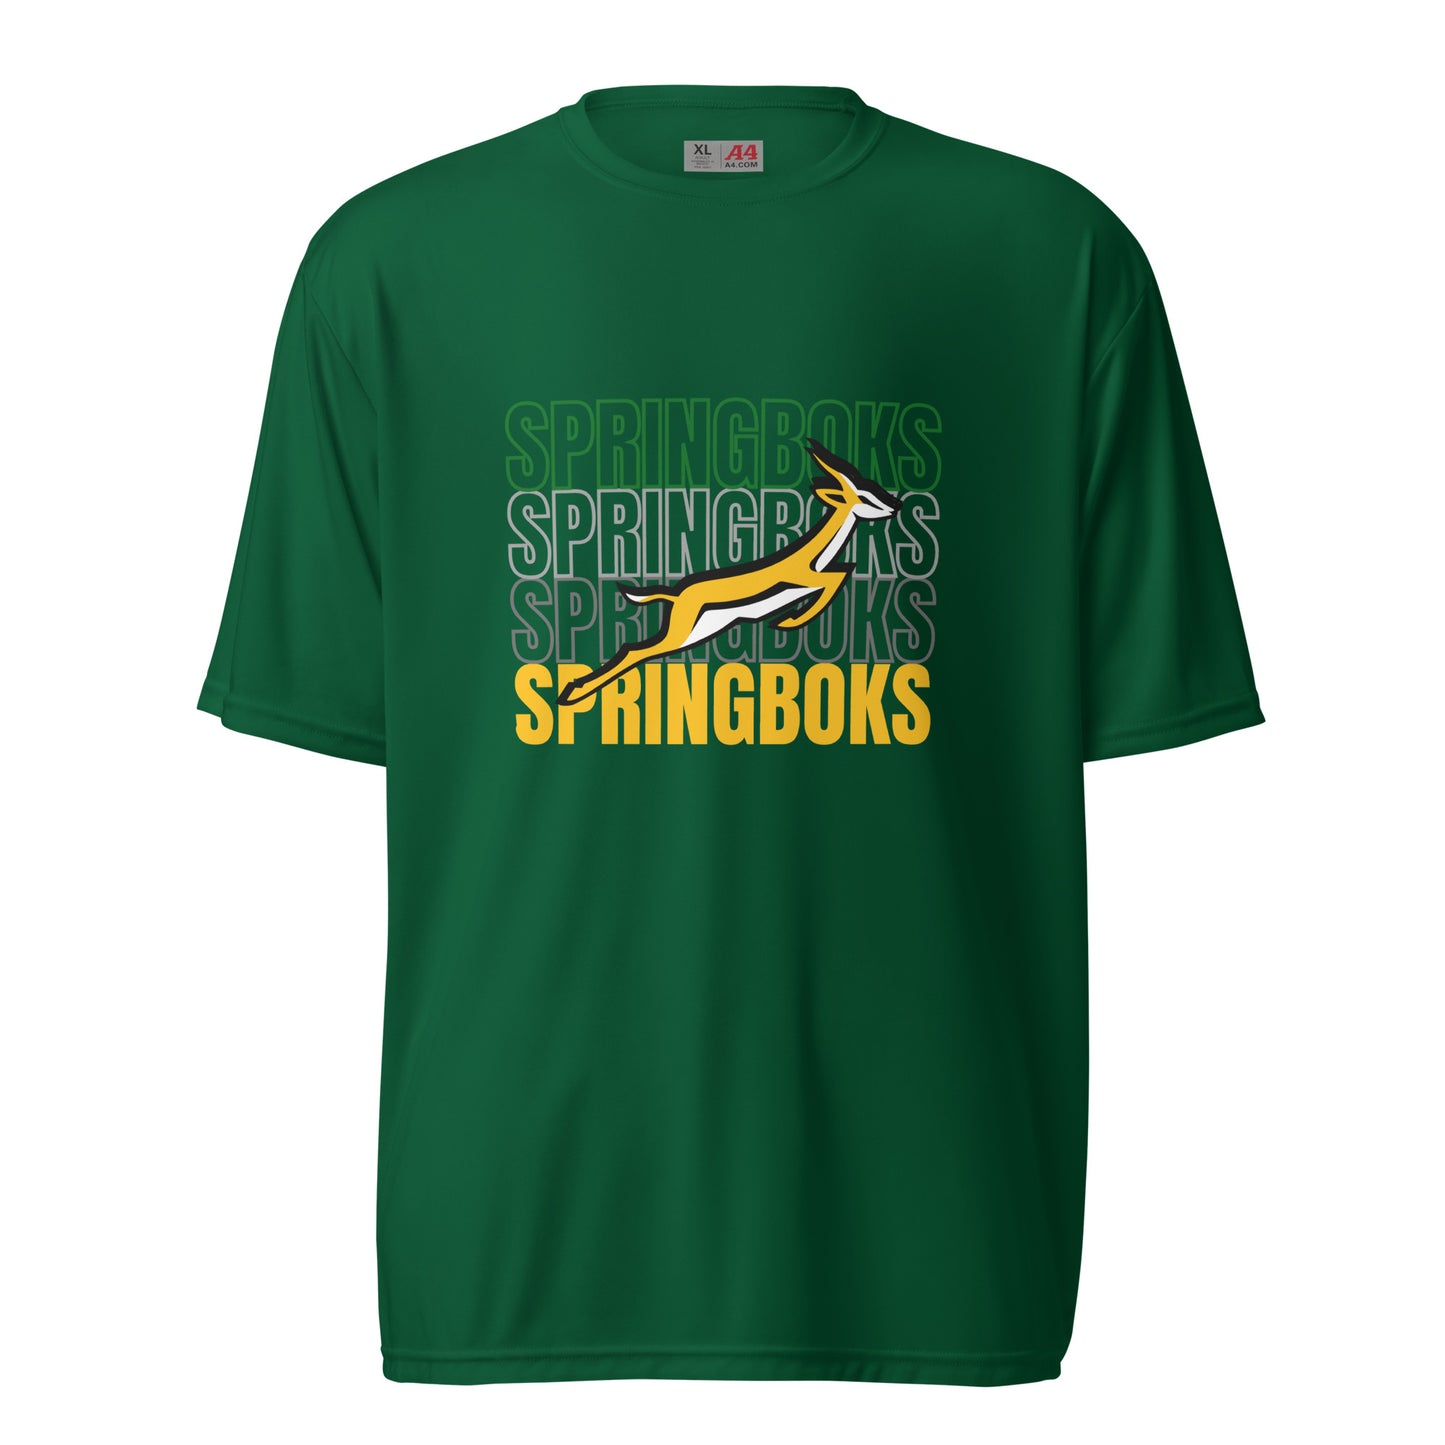 Unisex performance crew neck Springboks (Green and Gold)  t-shirt